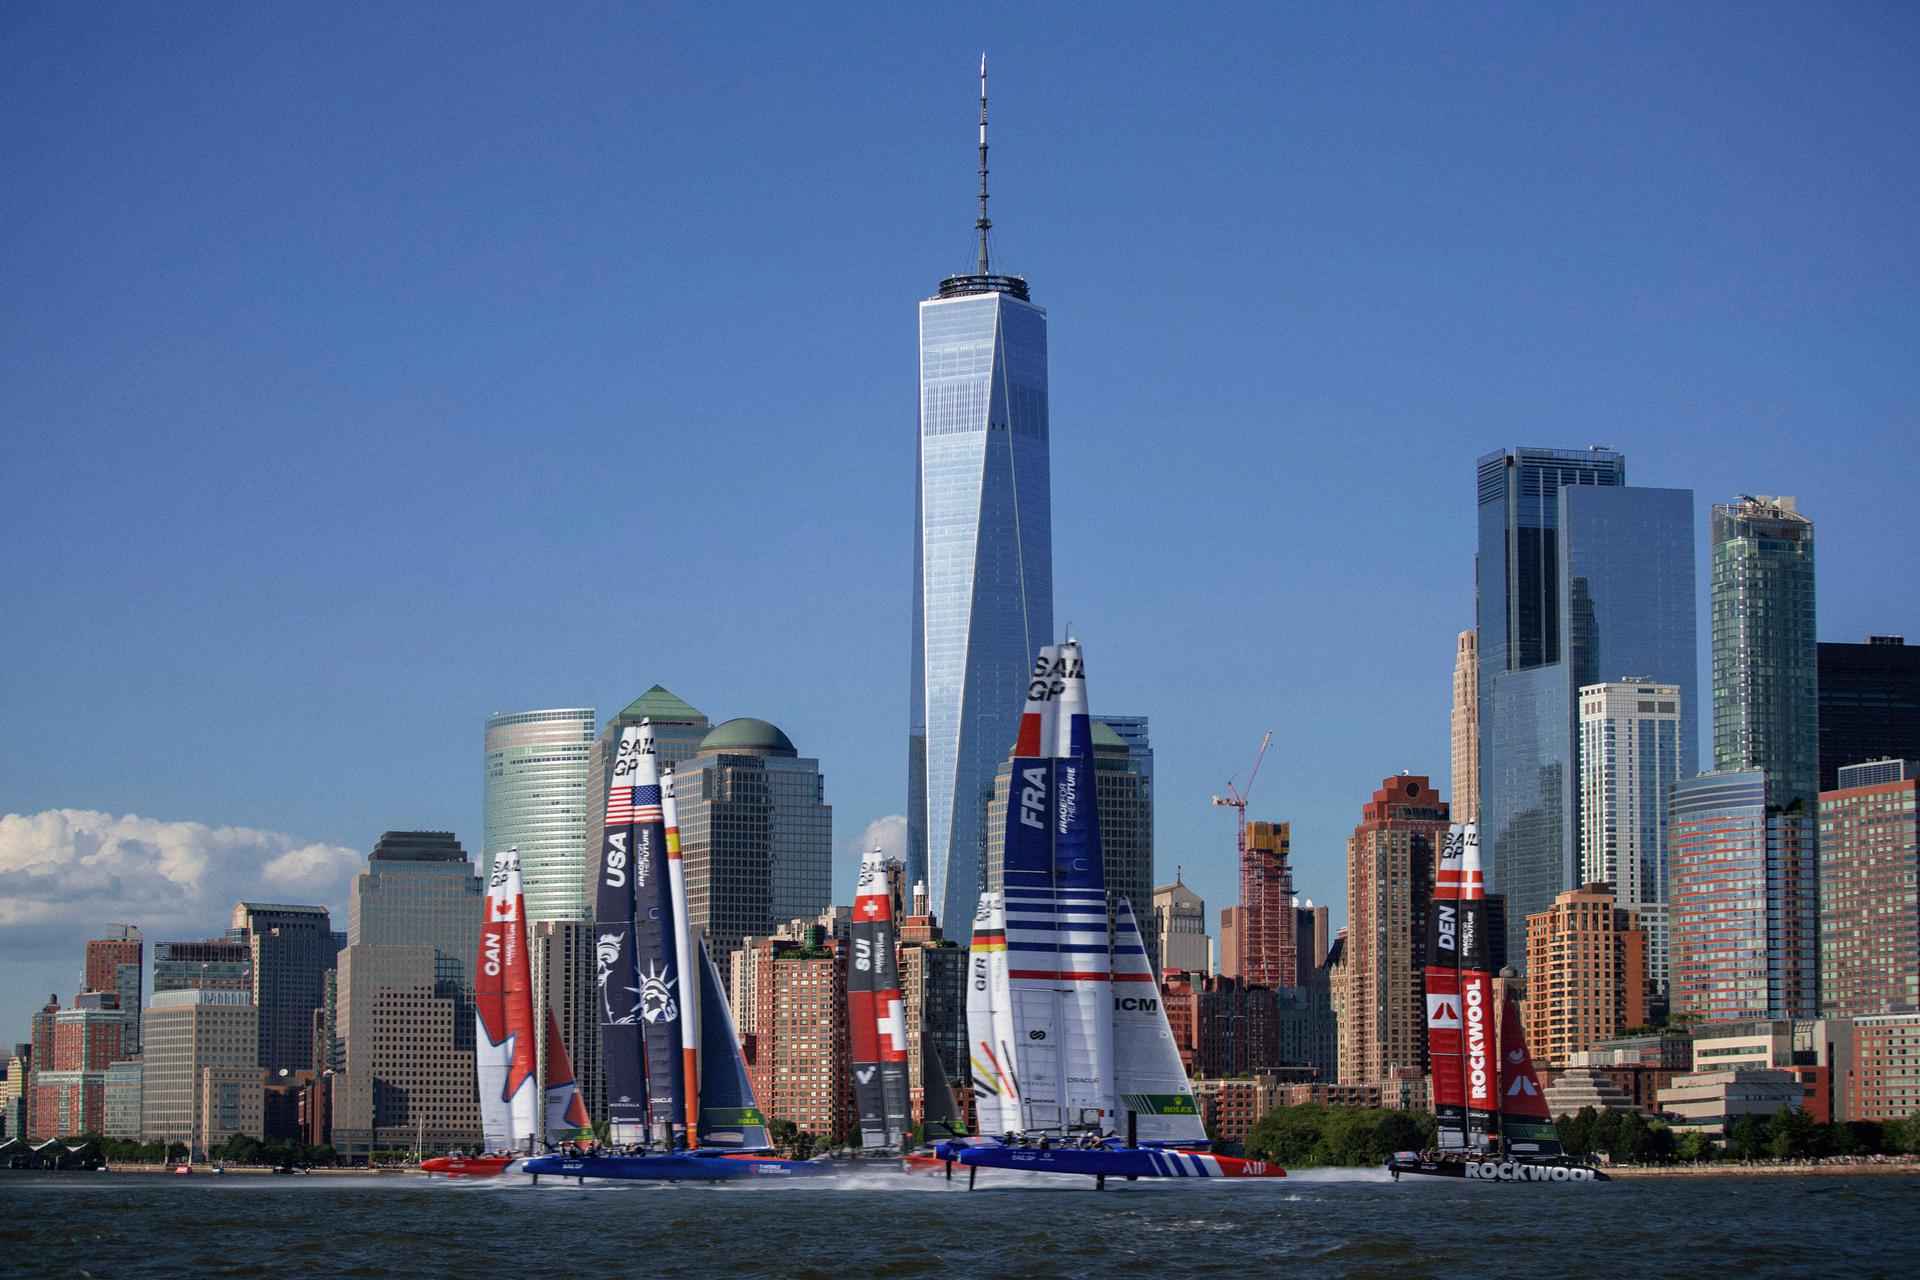 Sailboats competing in Sail GP near Manhattan skyline